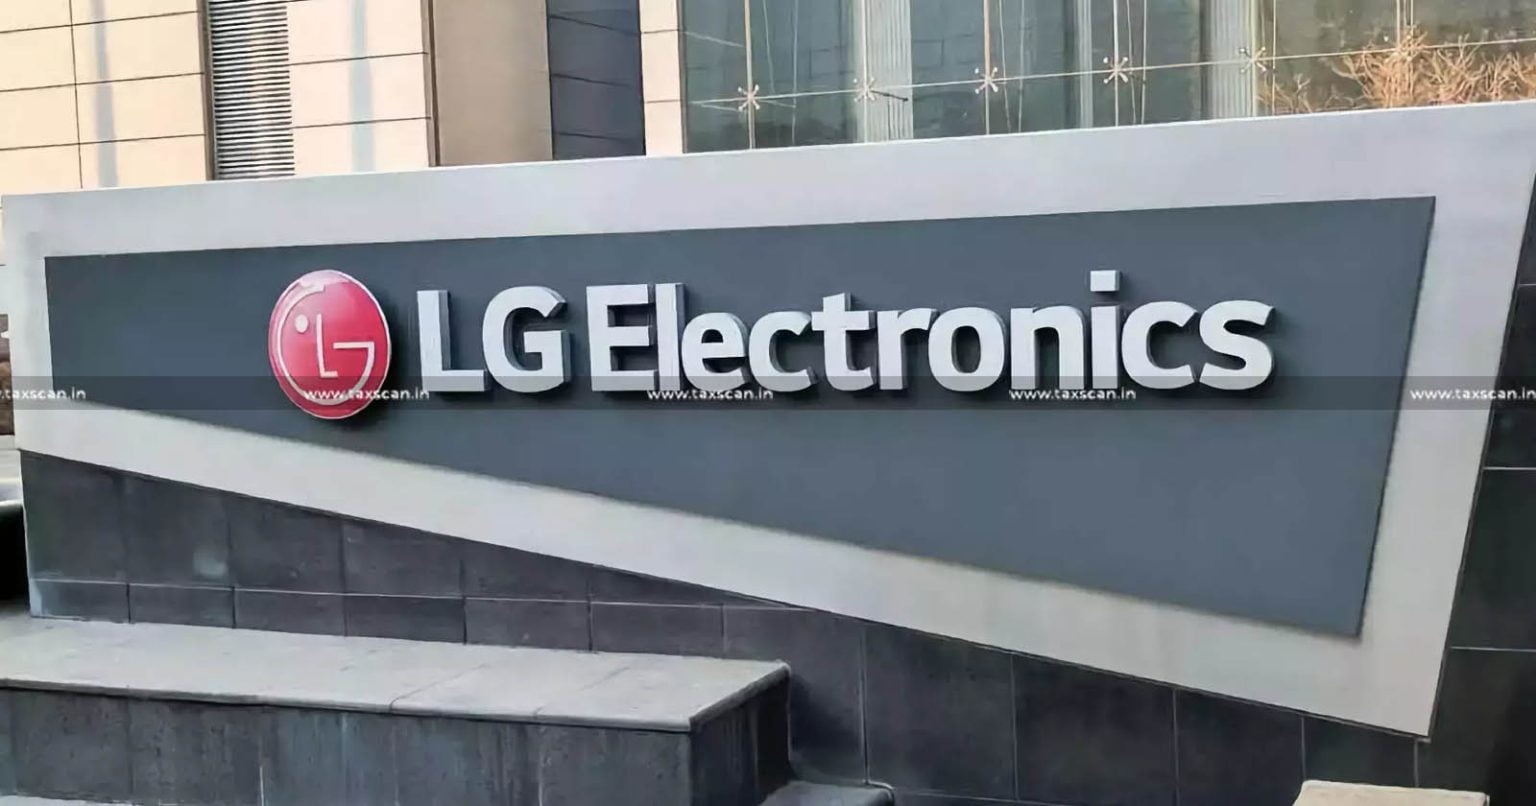 LG Electronics - CESTAT - Refund of SAD - Import of Goods - Service Tax Exemption Eligibility - taxscan